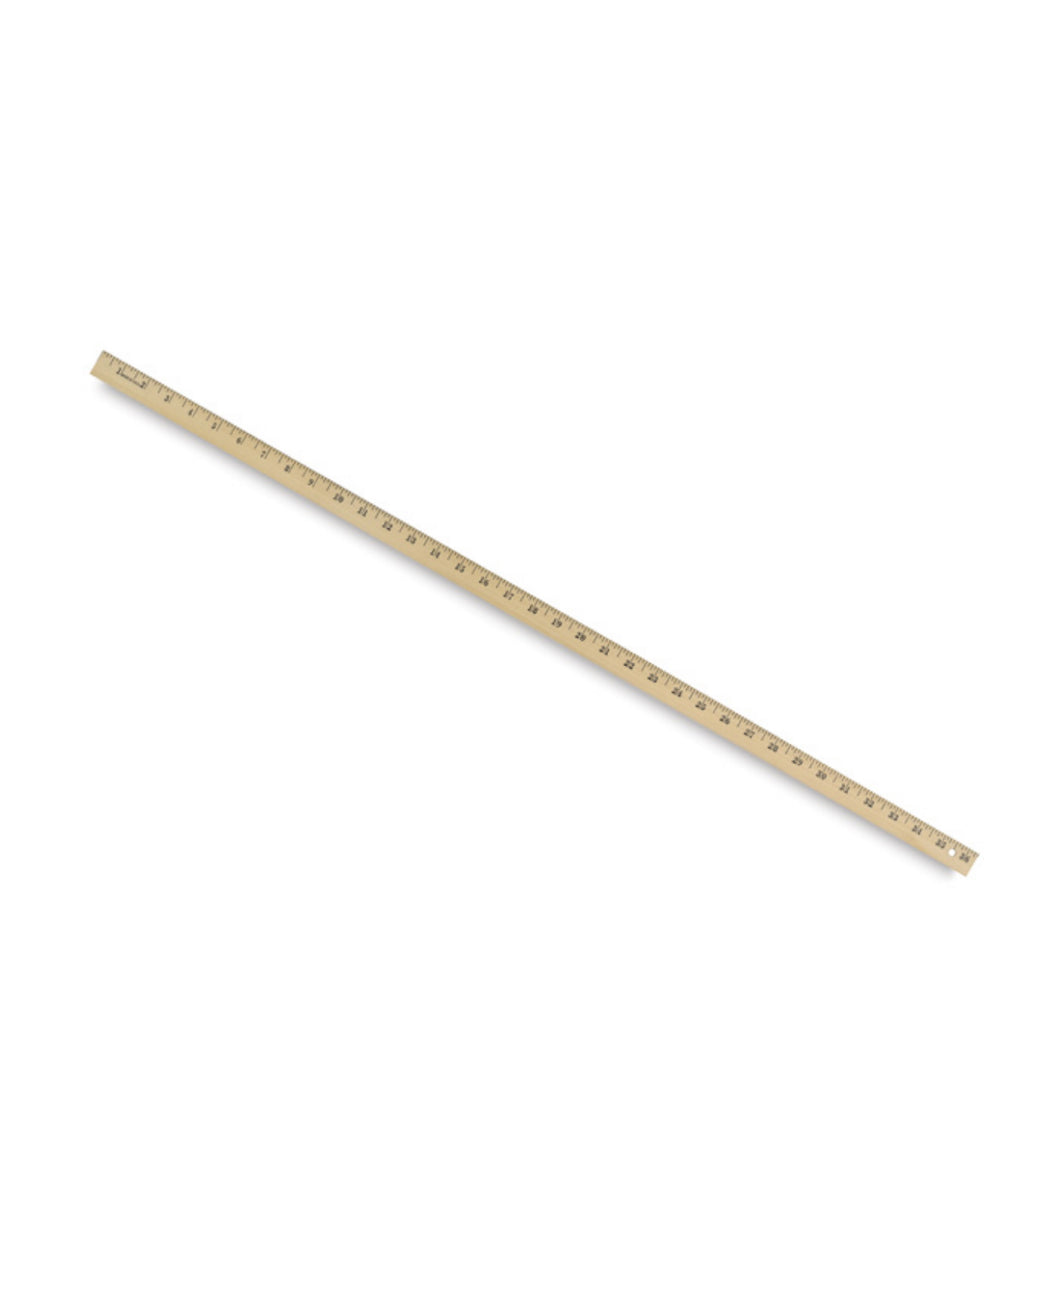 Wooden Yardstick, 36" - Zipper and Thread